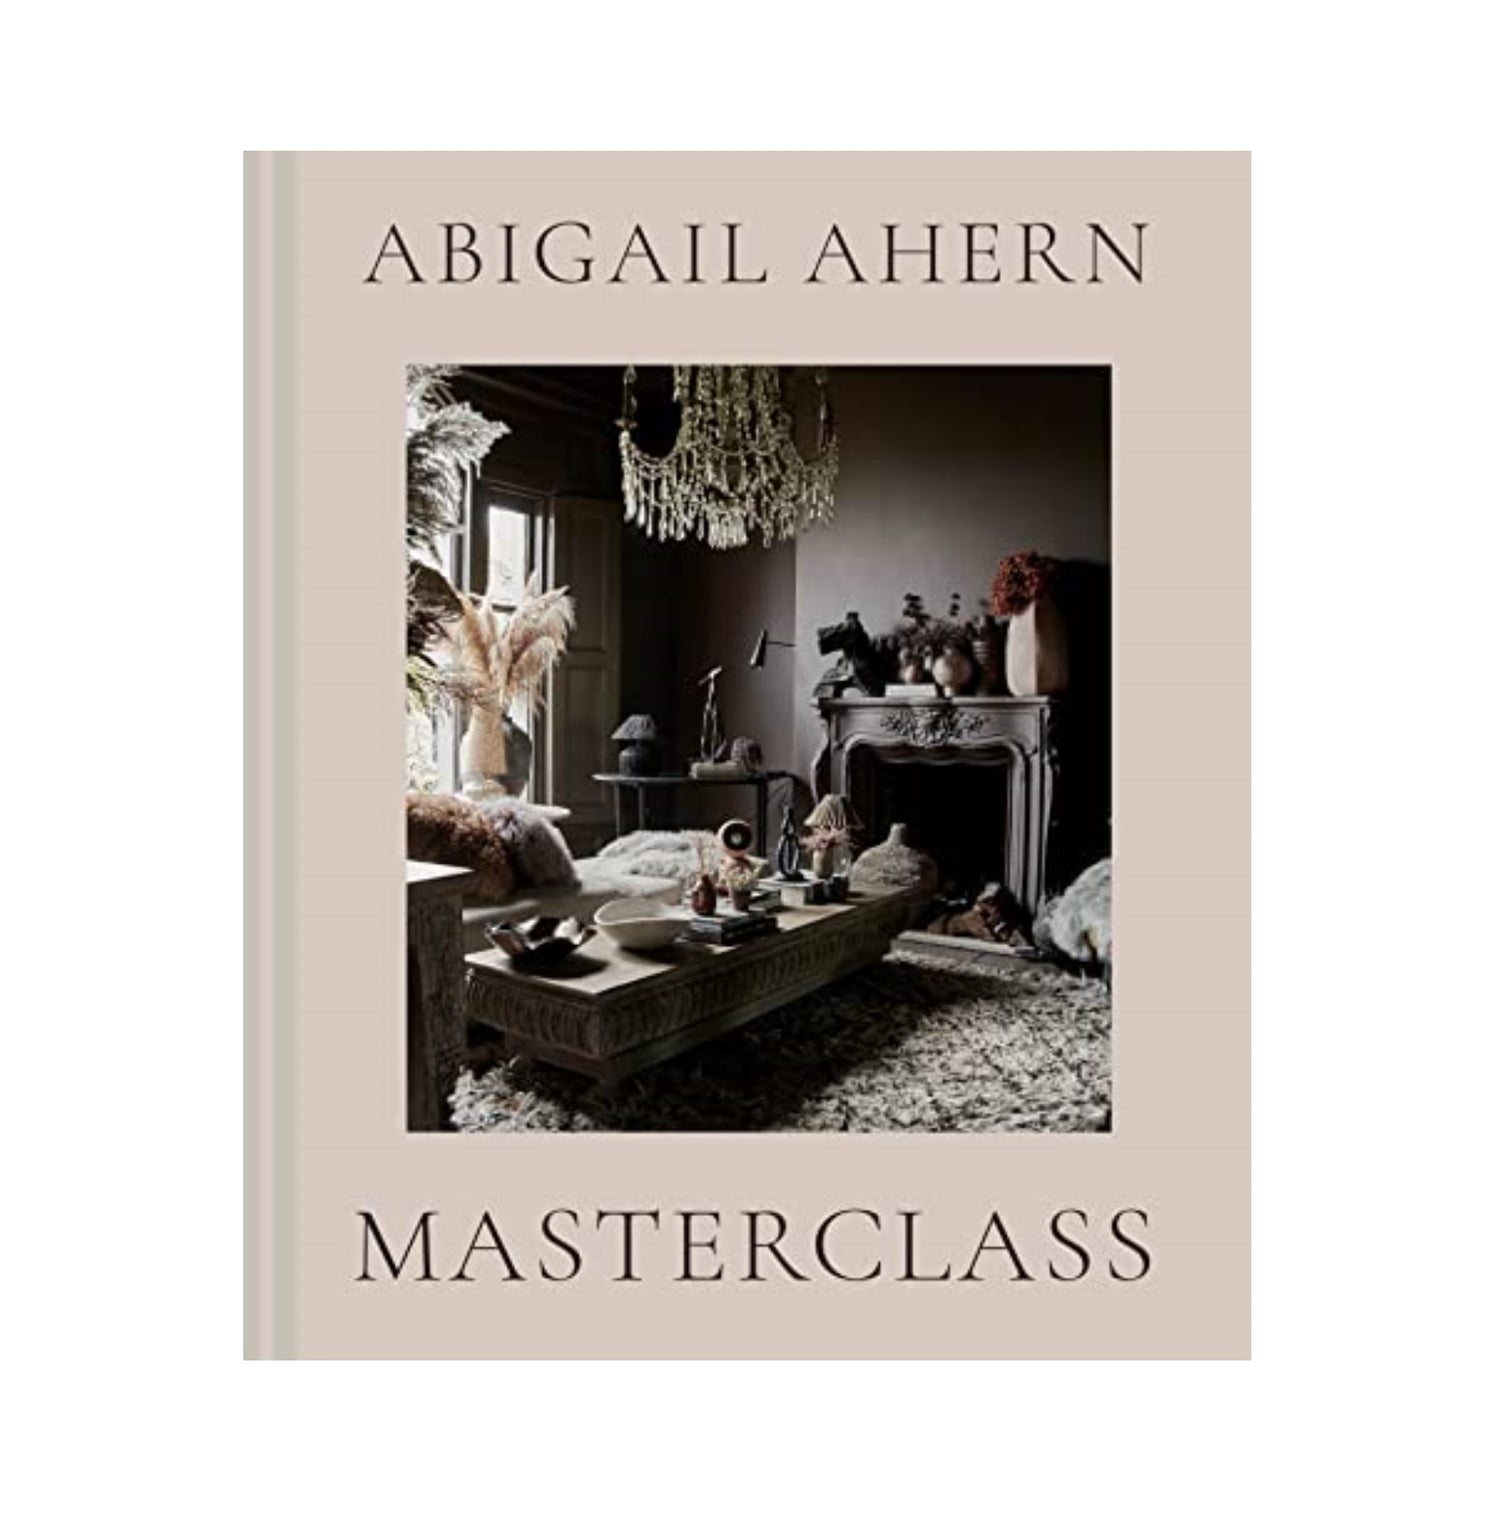 Masterclass by Abigail Aherns